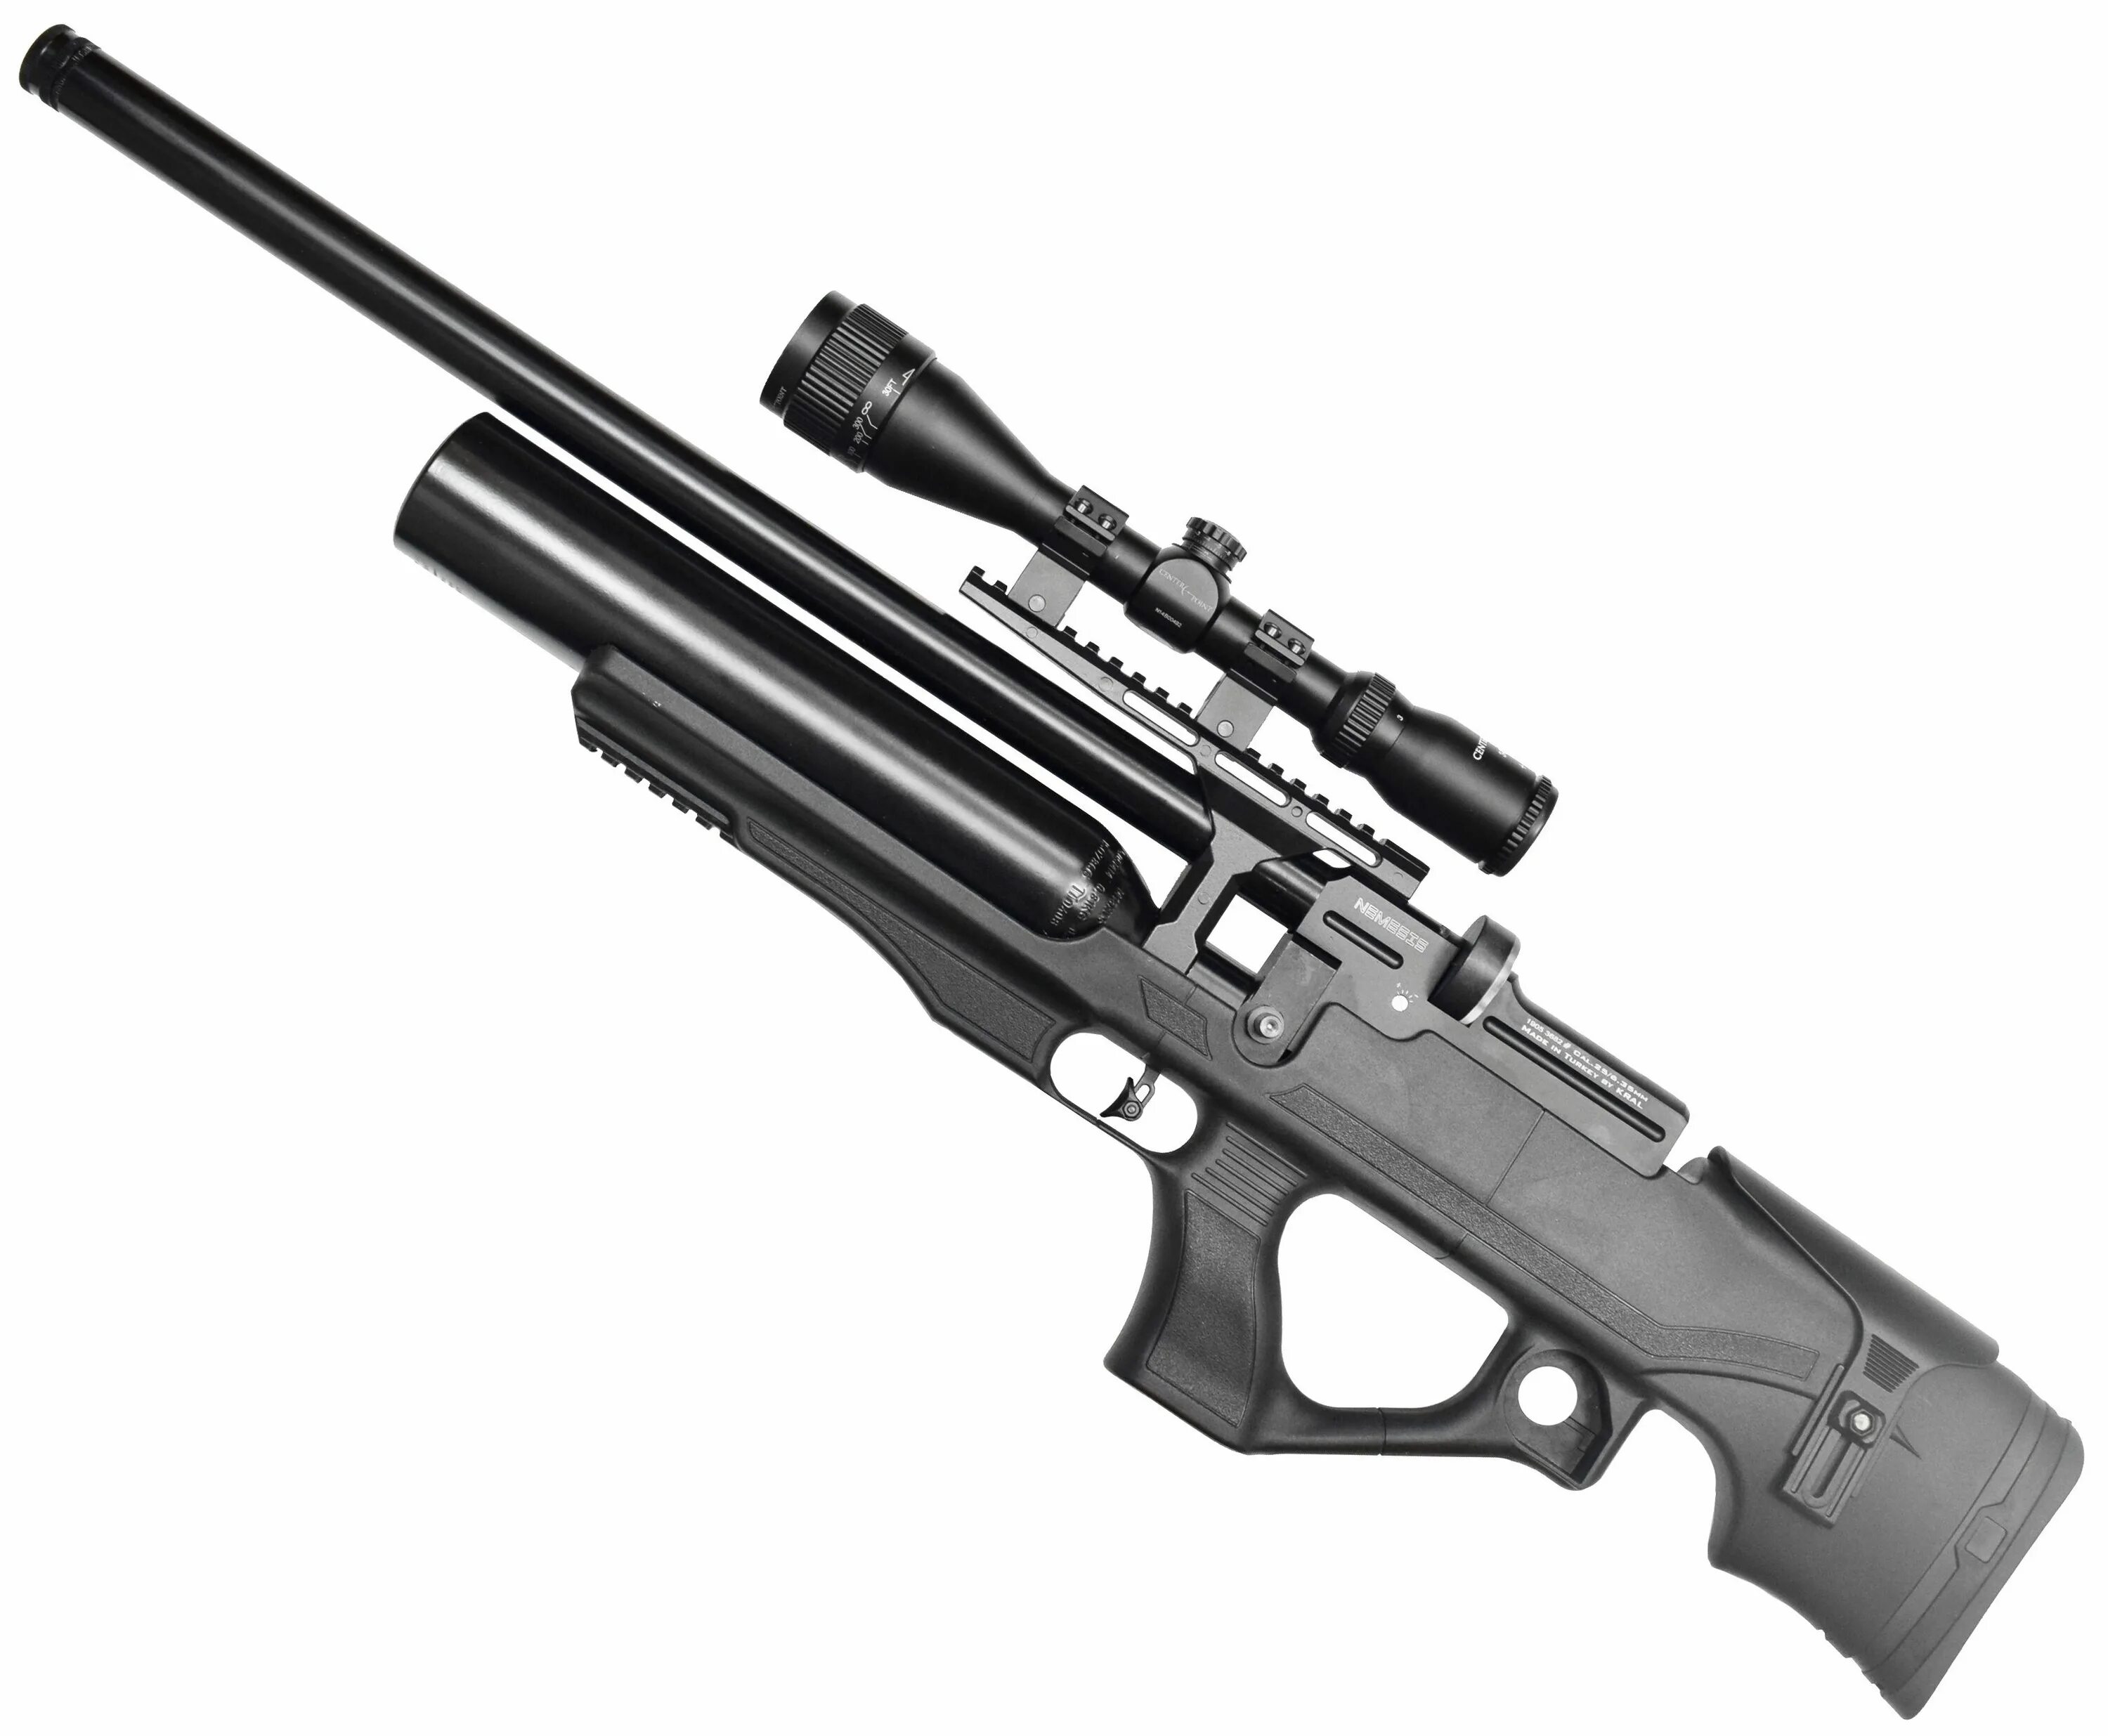 Kral maxi 3 6.35. Пневматическая винтовка Kral Puncher Maxi.3 s (пластик, PCP). PCP пневматика 6.35 Kral. Пневматическая винтовка Kral Puncher Maxi 3 5,5 мм. Kral Puncher Maxi 3 (PCP, пластик) 6.35.